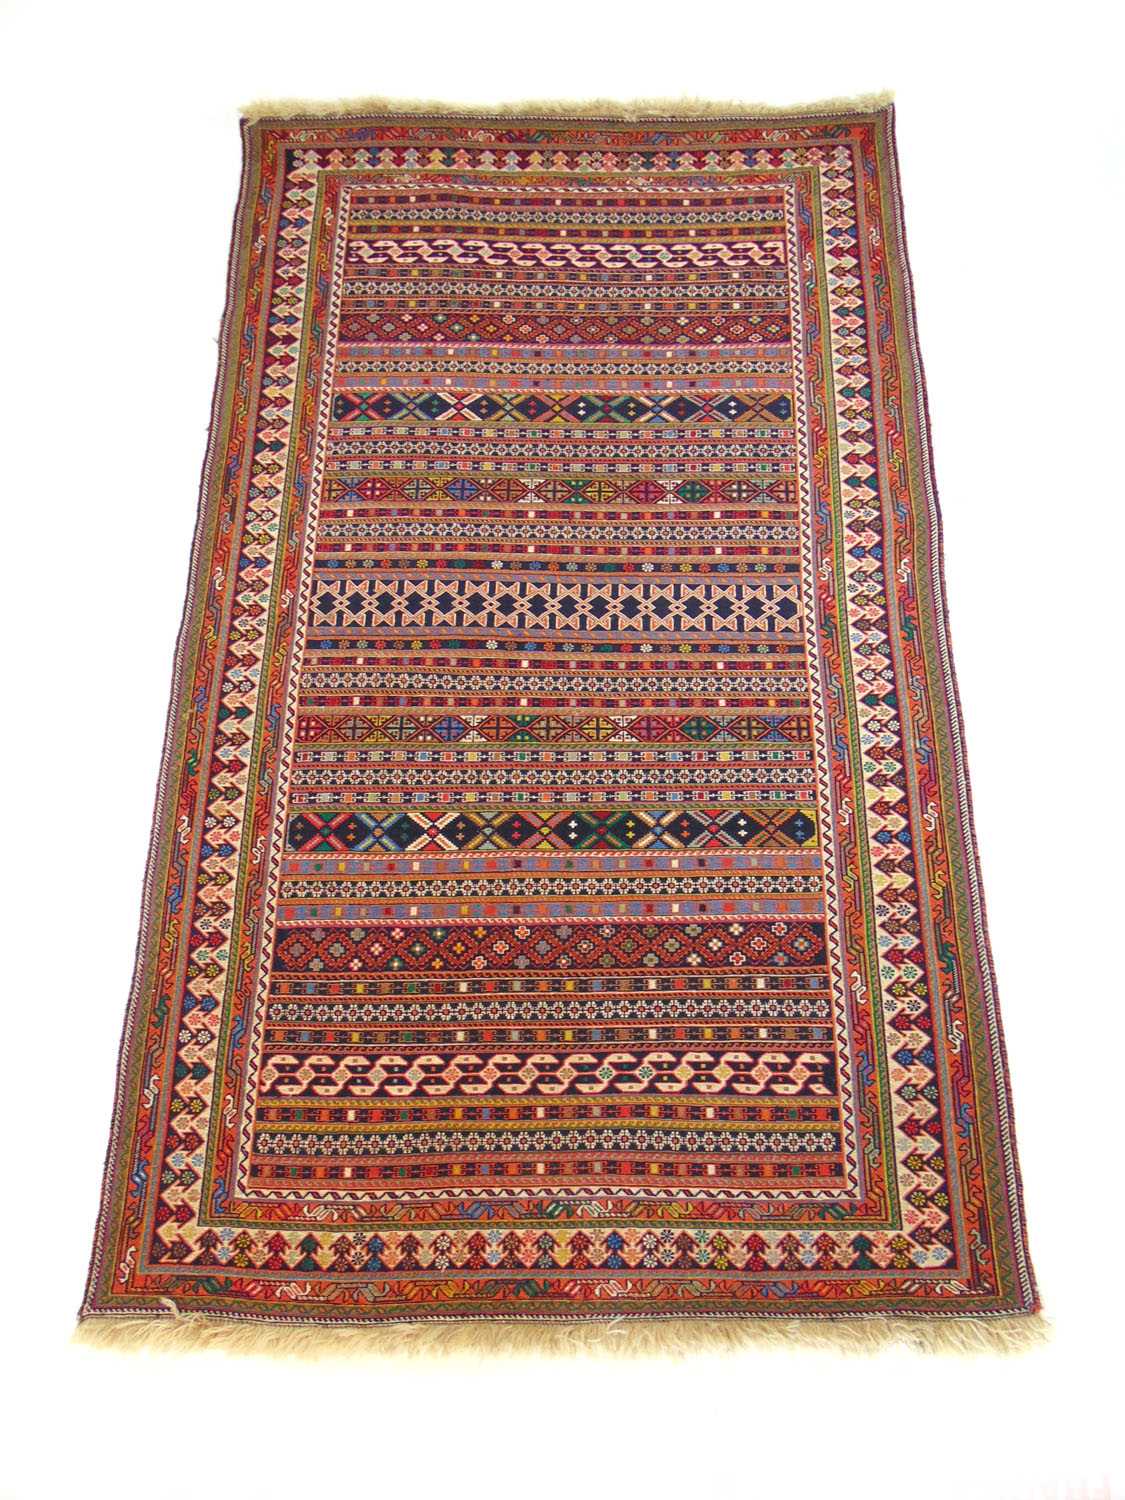 A handwoven Persian (?) rug, the multi line border surrounding the striped field, 214 cm x 128 cm